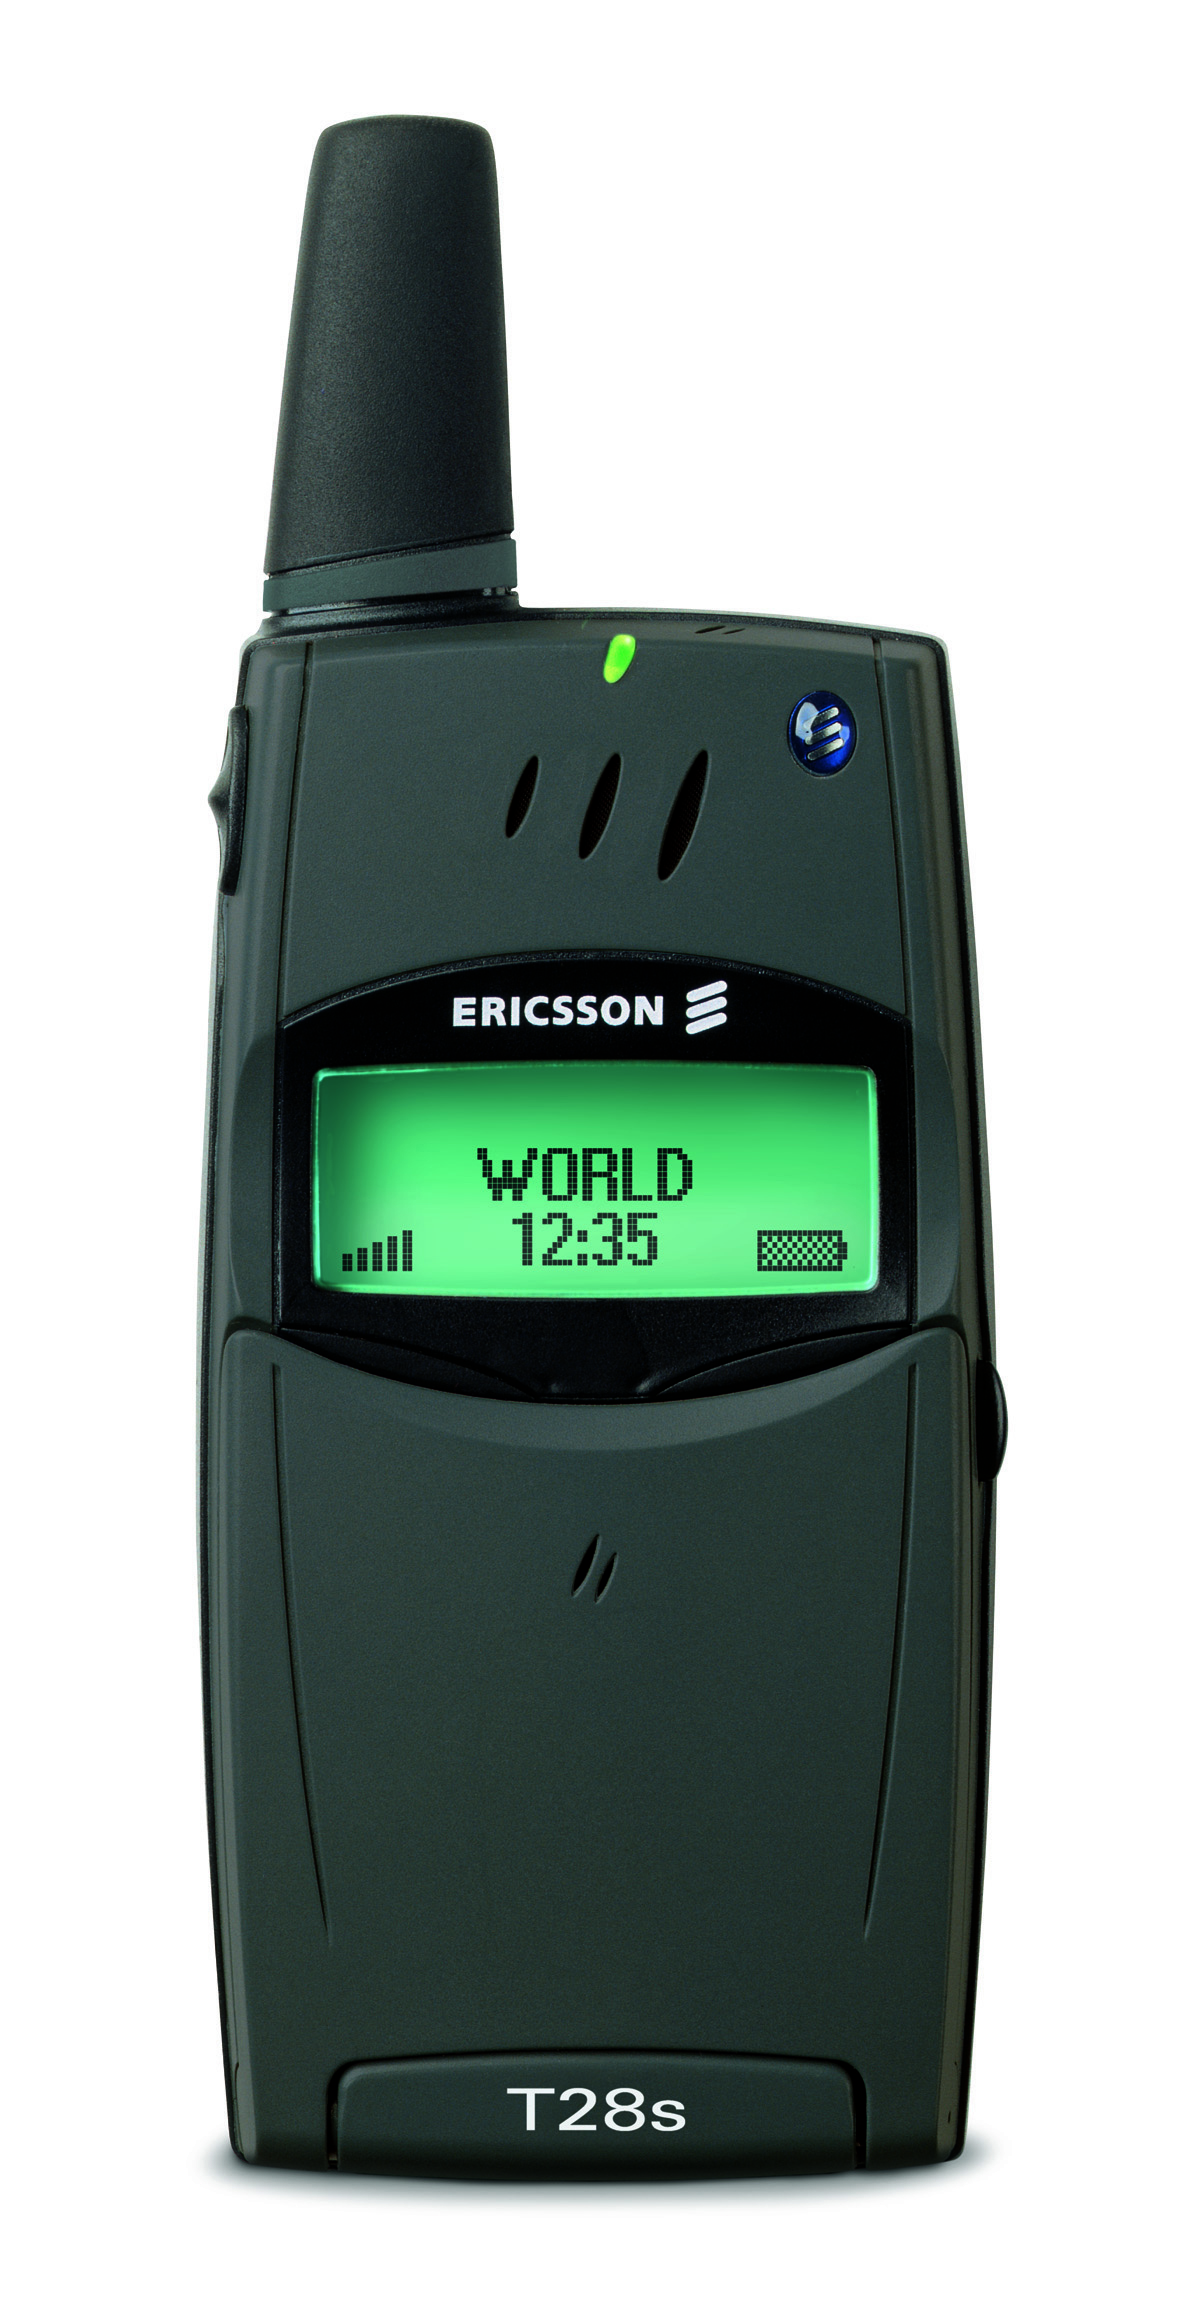 Ericsson 2G phone